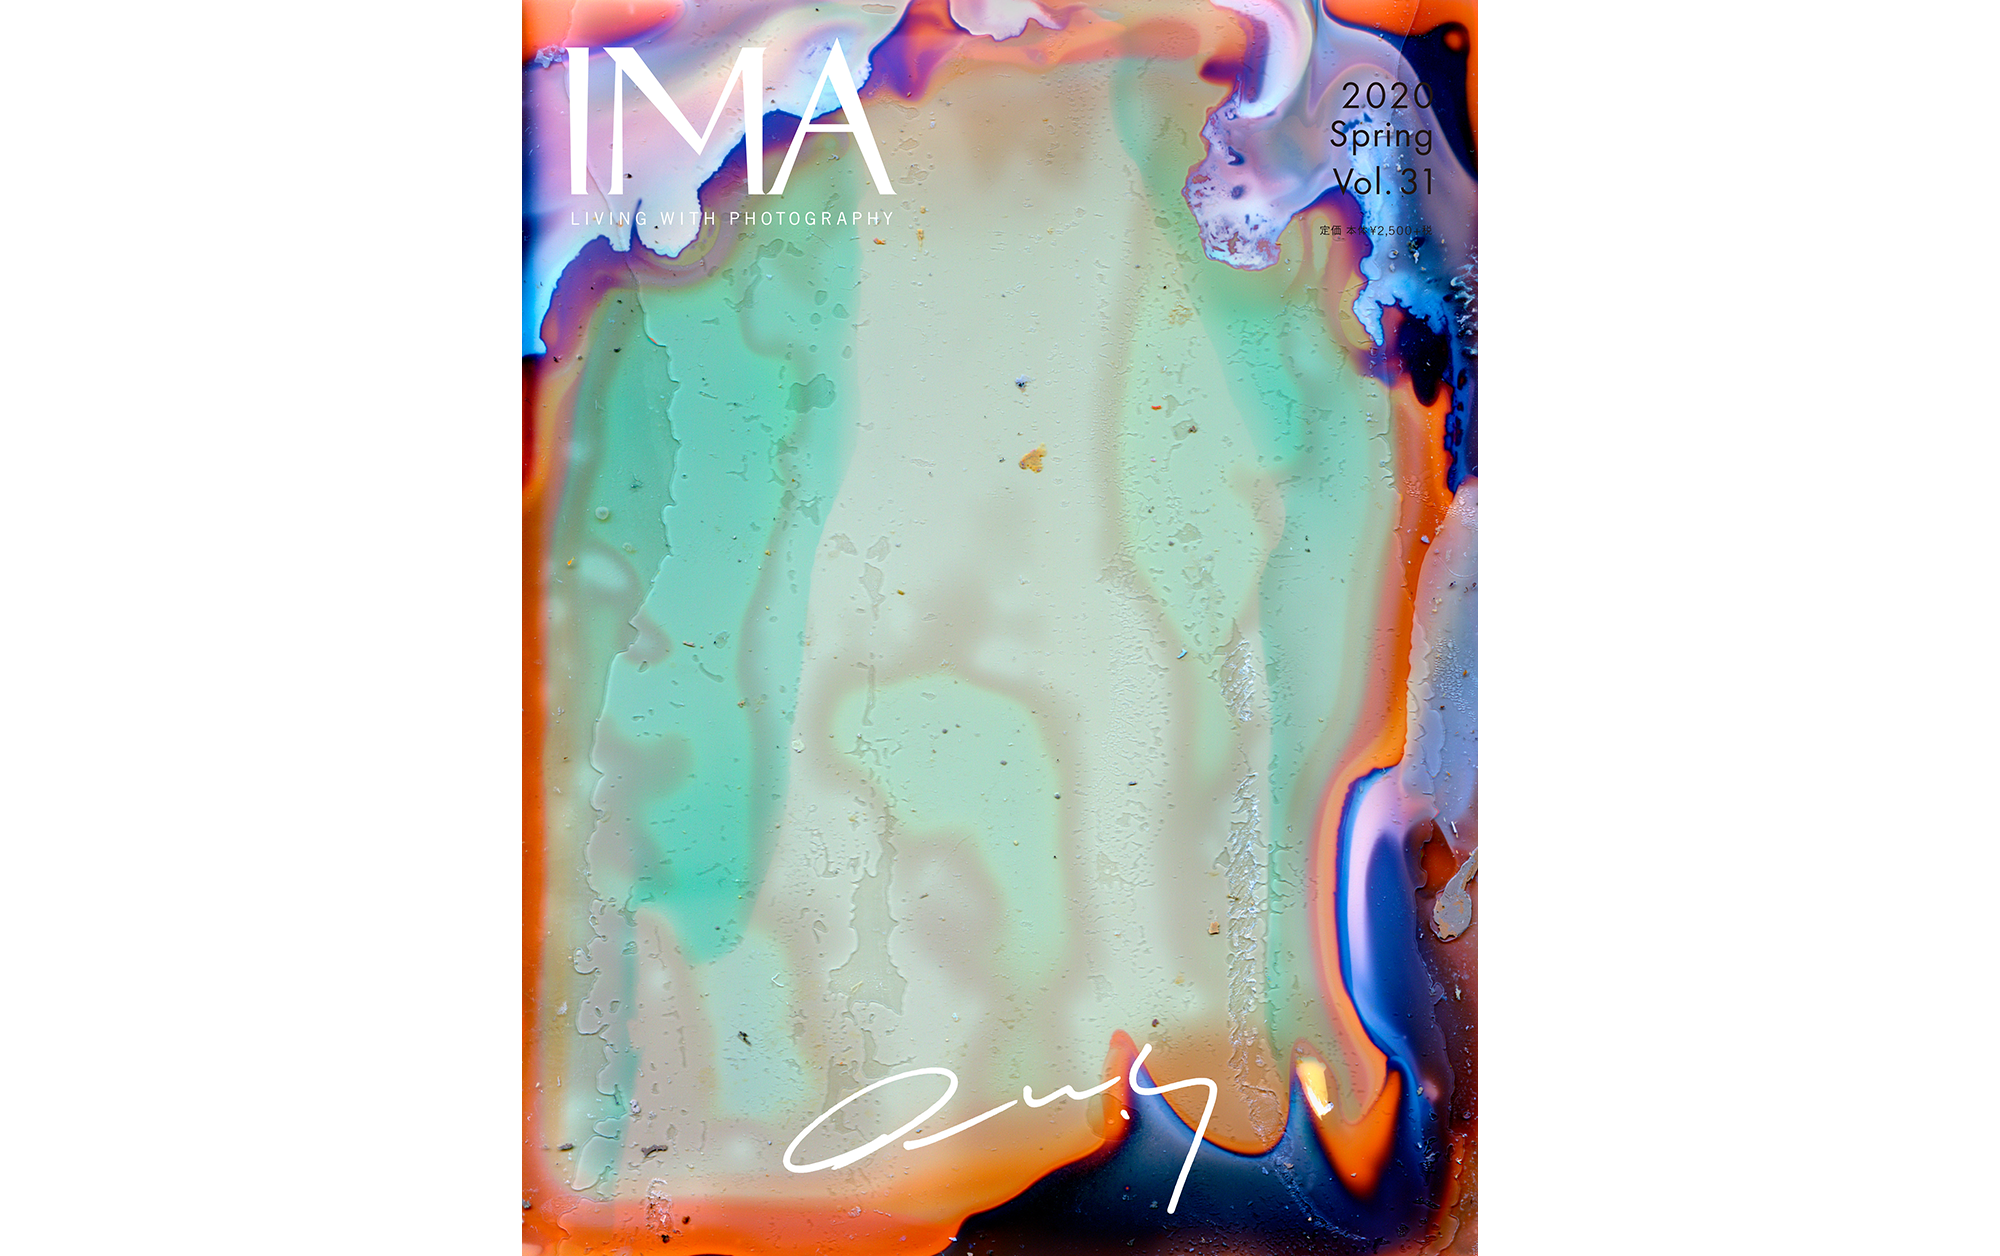 IMA 2020 Spring Vol.31 | Event | IMA ONLINE